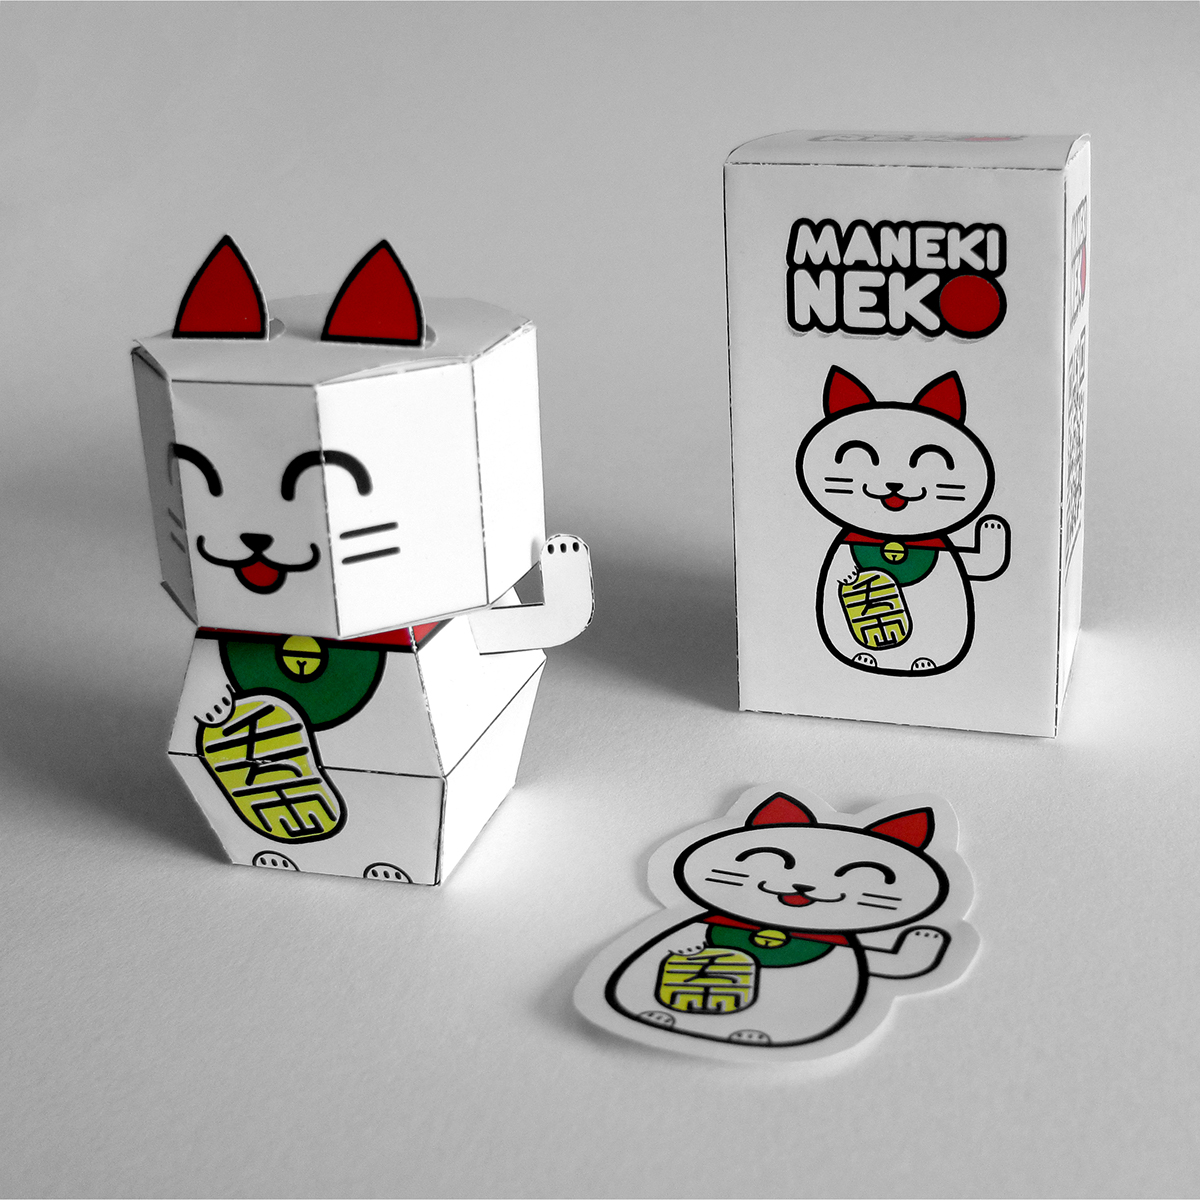 maneki neko maneki neko peru dos al cubo japan japanese Cat Gato Suerte lucky JAPON japones kioshi shimabuku papercraft